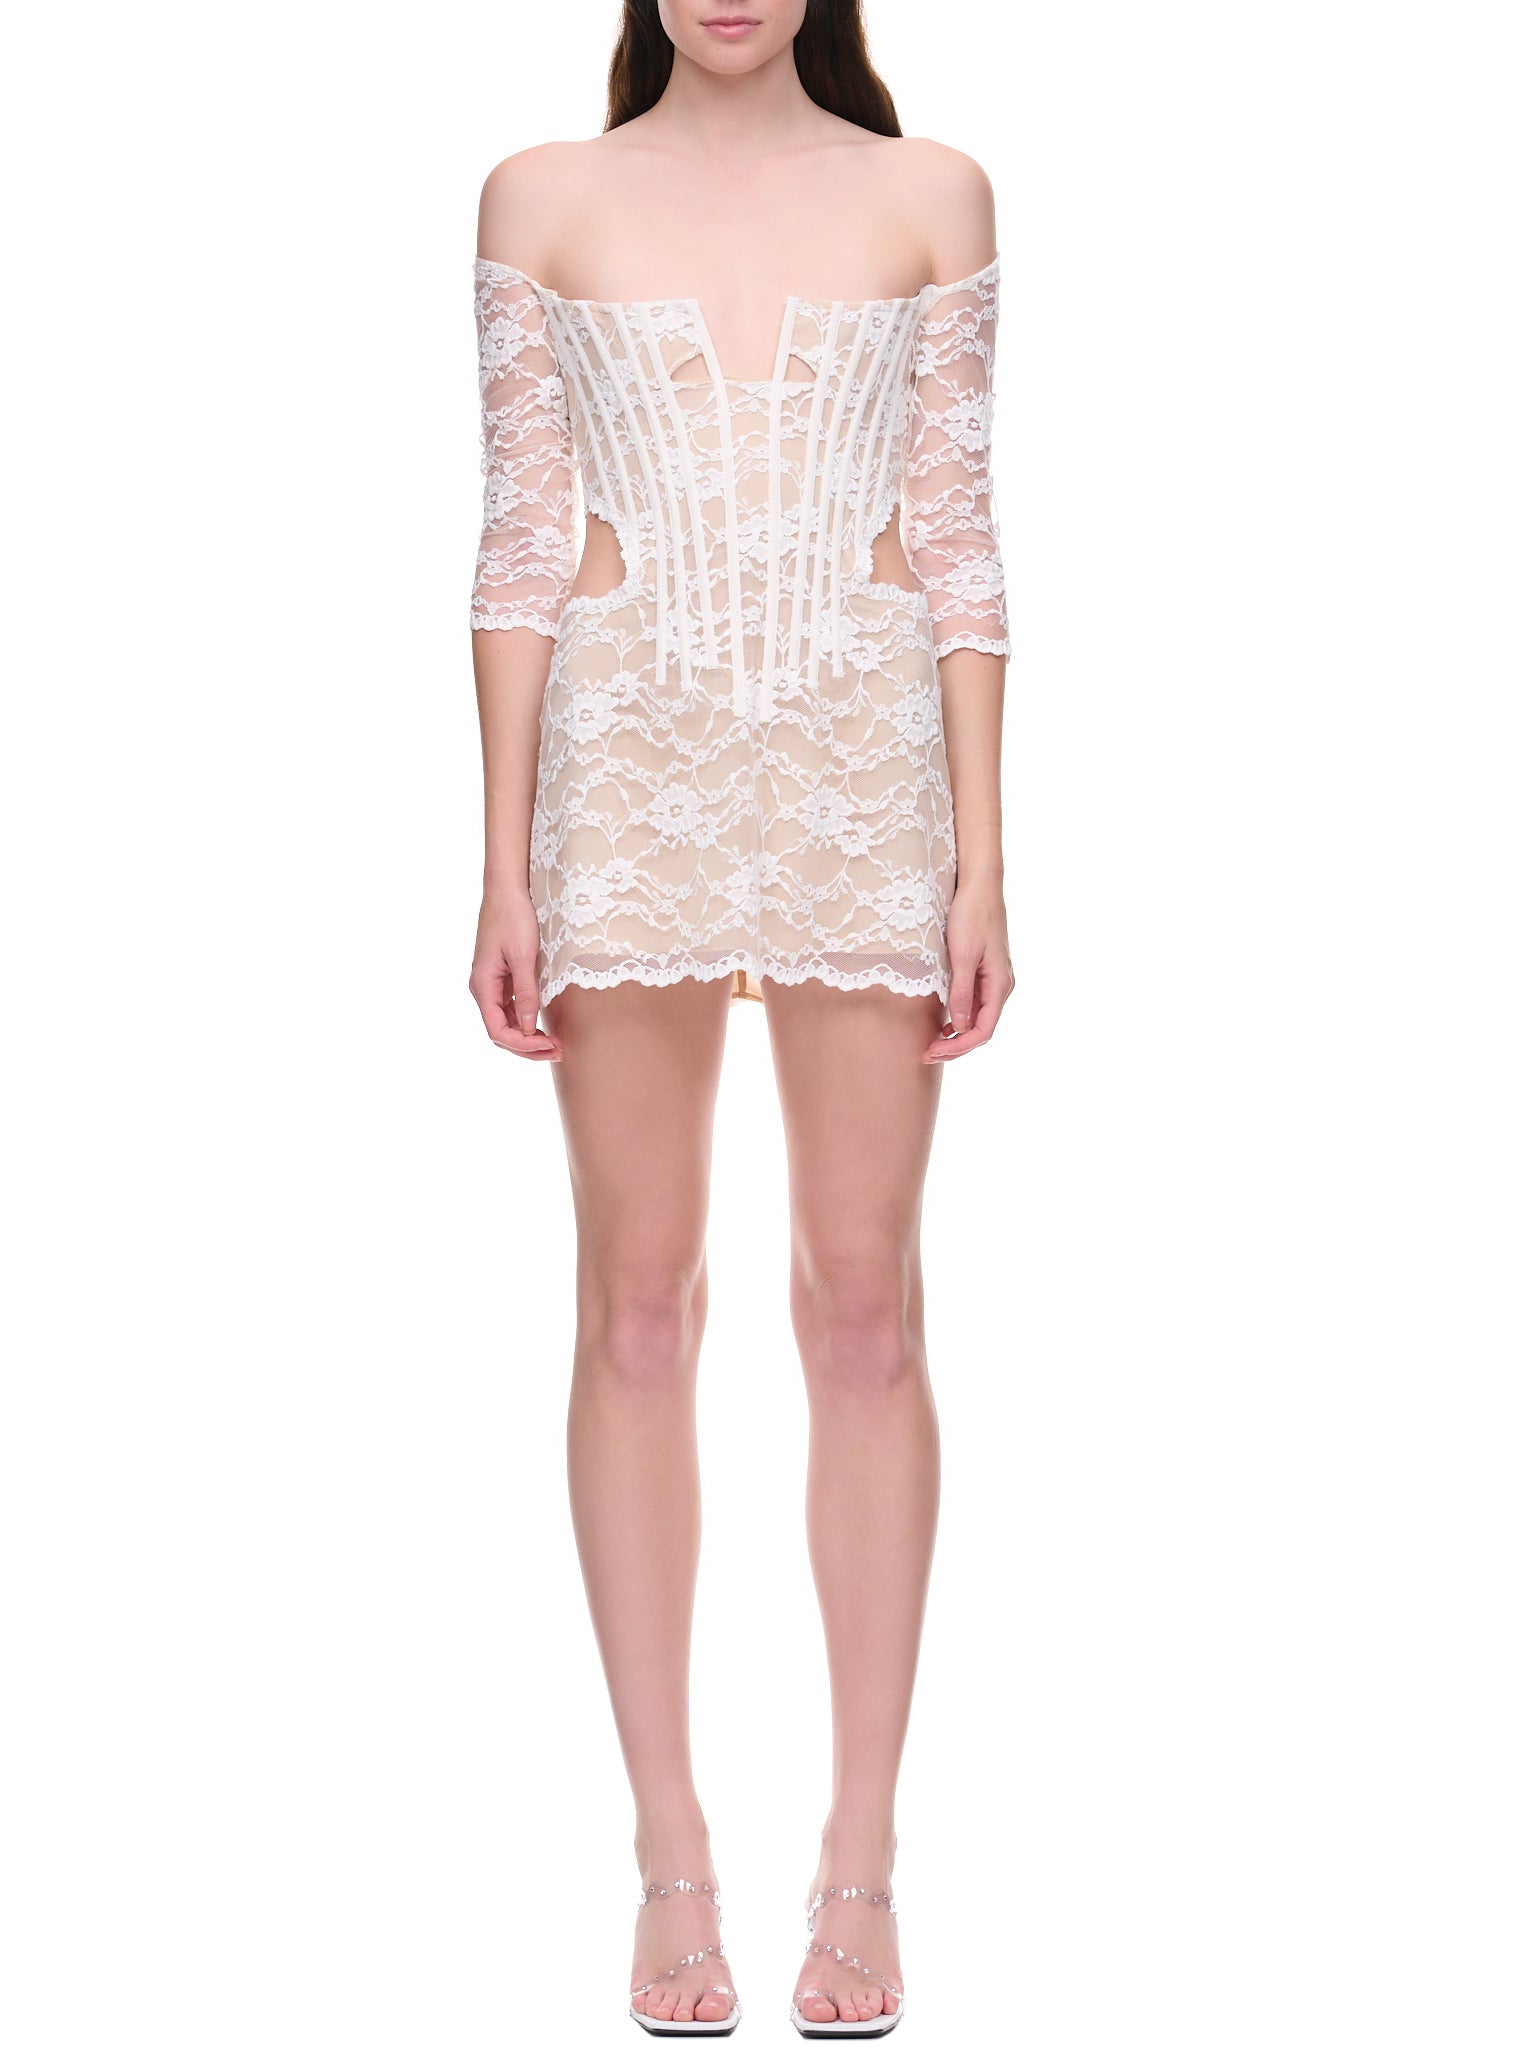 Lace Corset Dress (SBHL019-CREAM-NUDE)